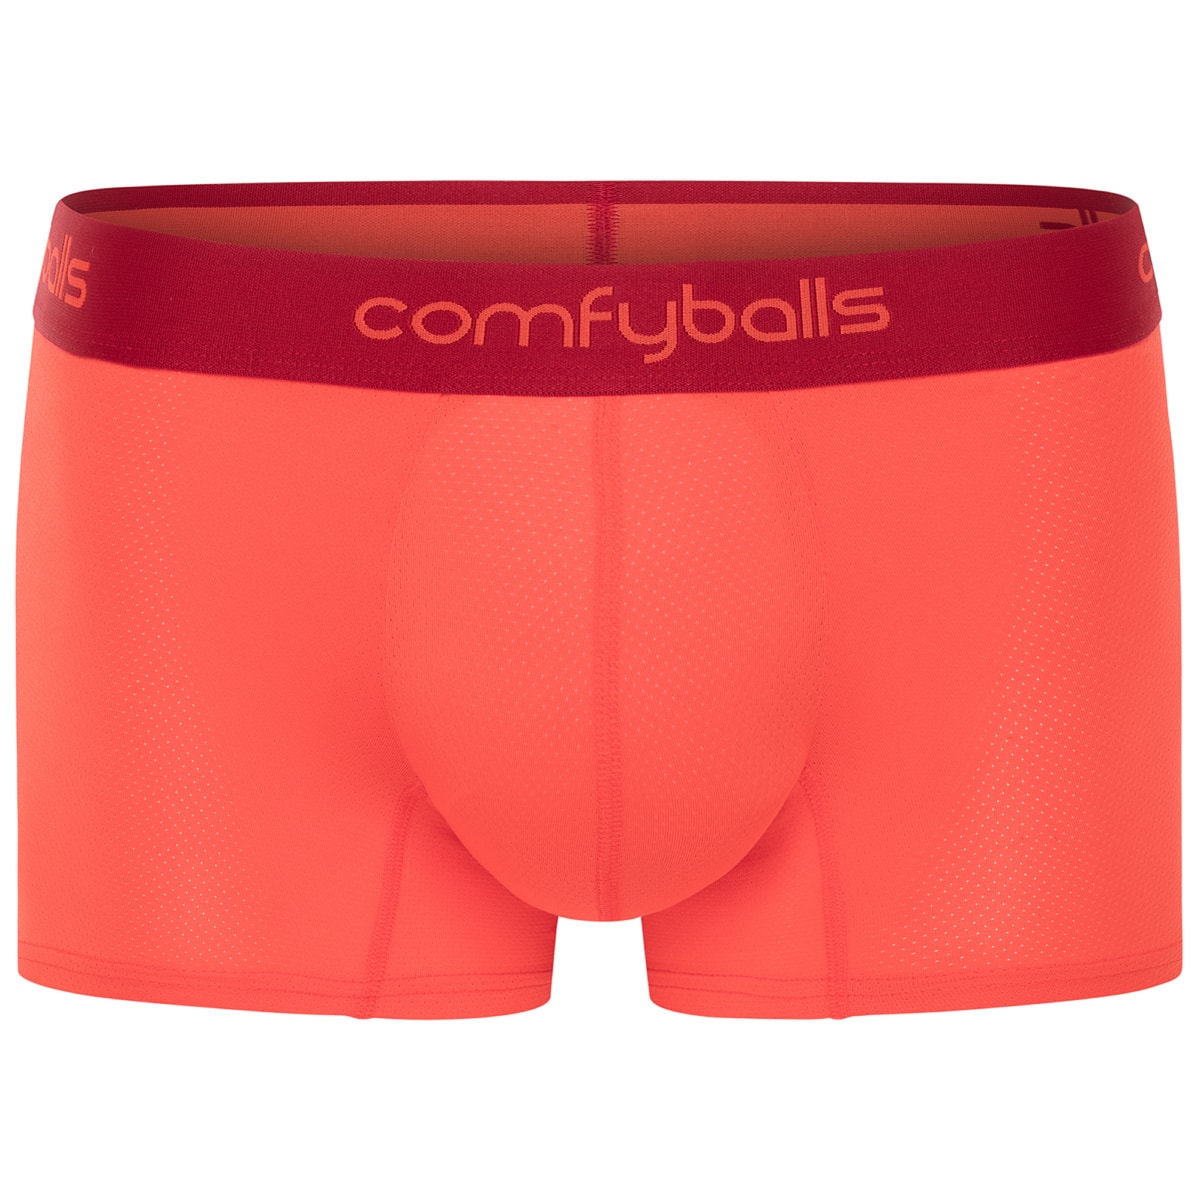 Comfyballs Performance Hybrid Long Pink Red Boxer - Comfyballs